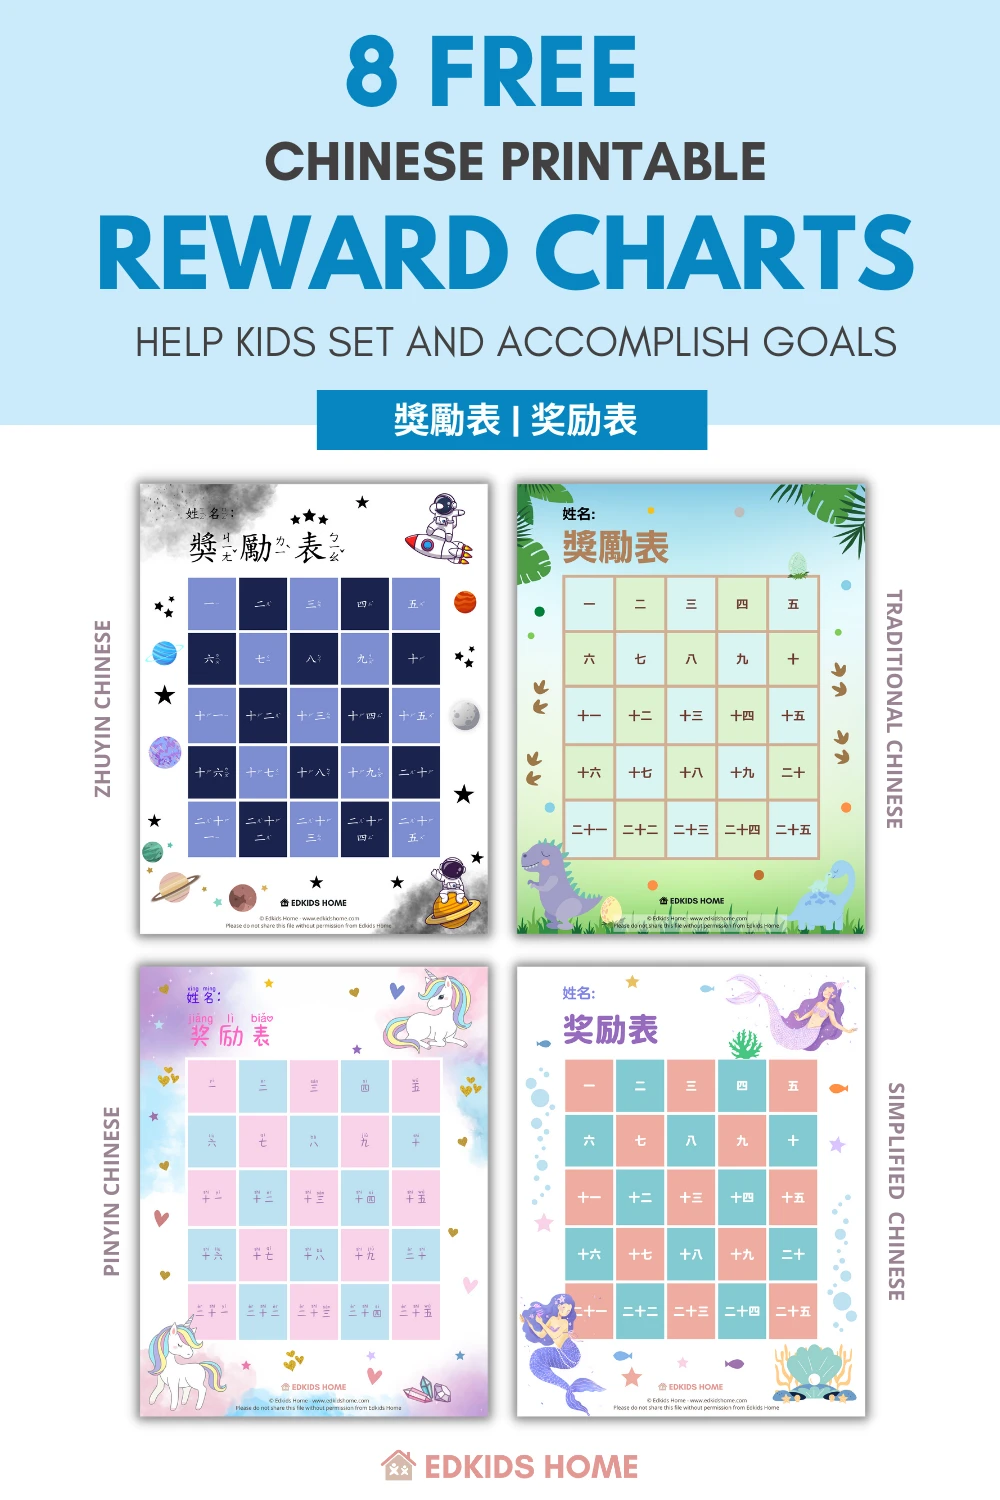 8 free Chinese printable reward charts help kids set and accomplish goals